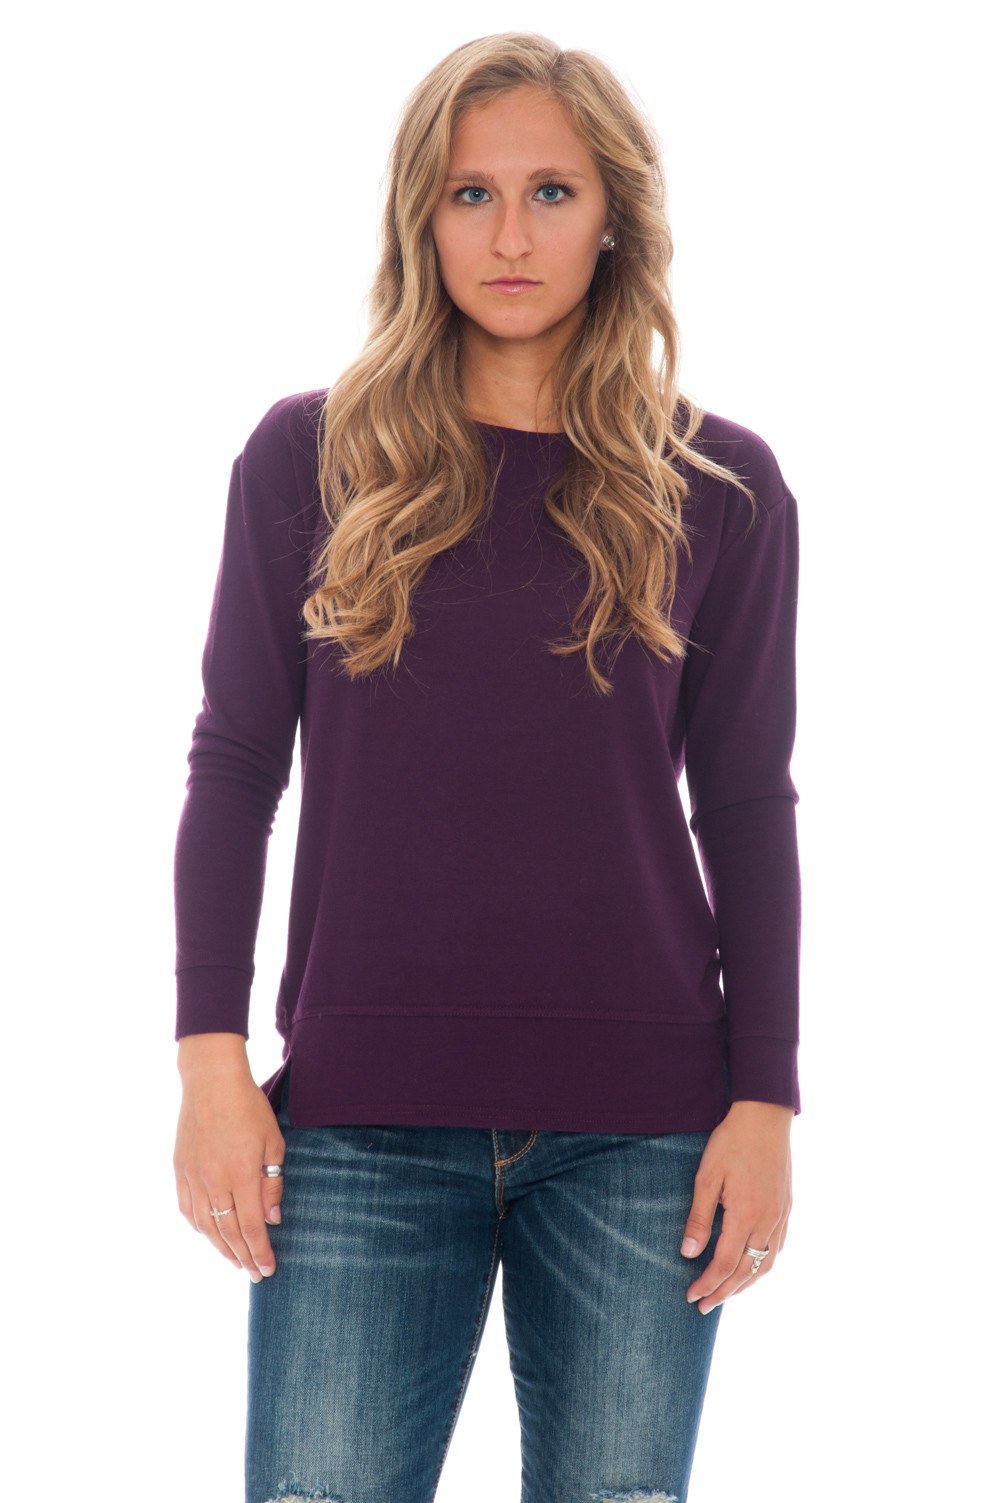 Top - Begley Purple Sleeve by BB Dakota - 1